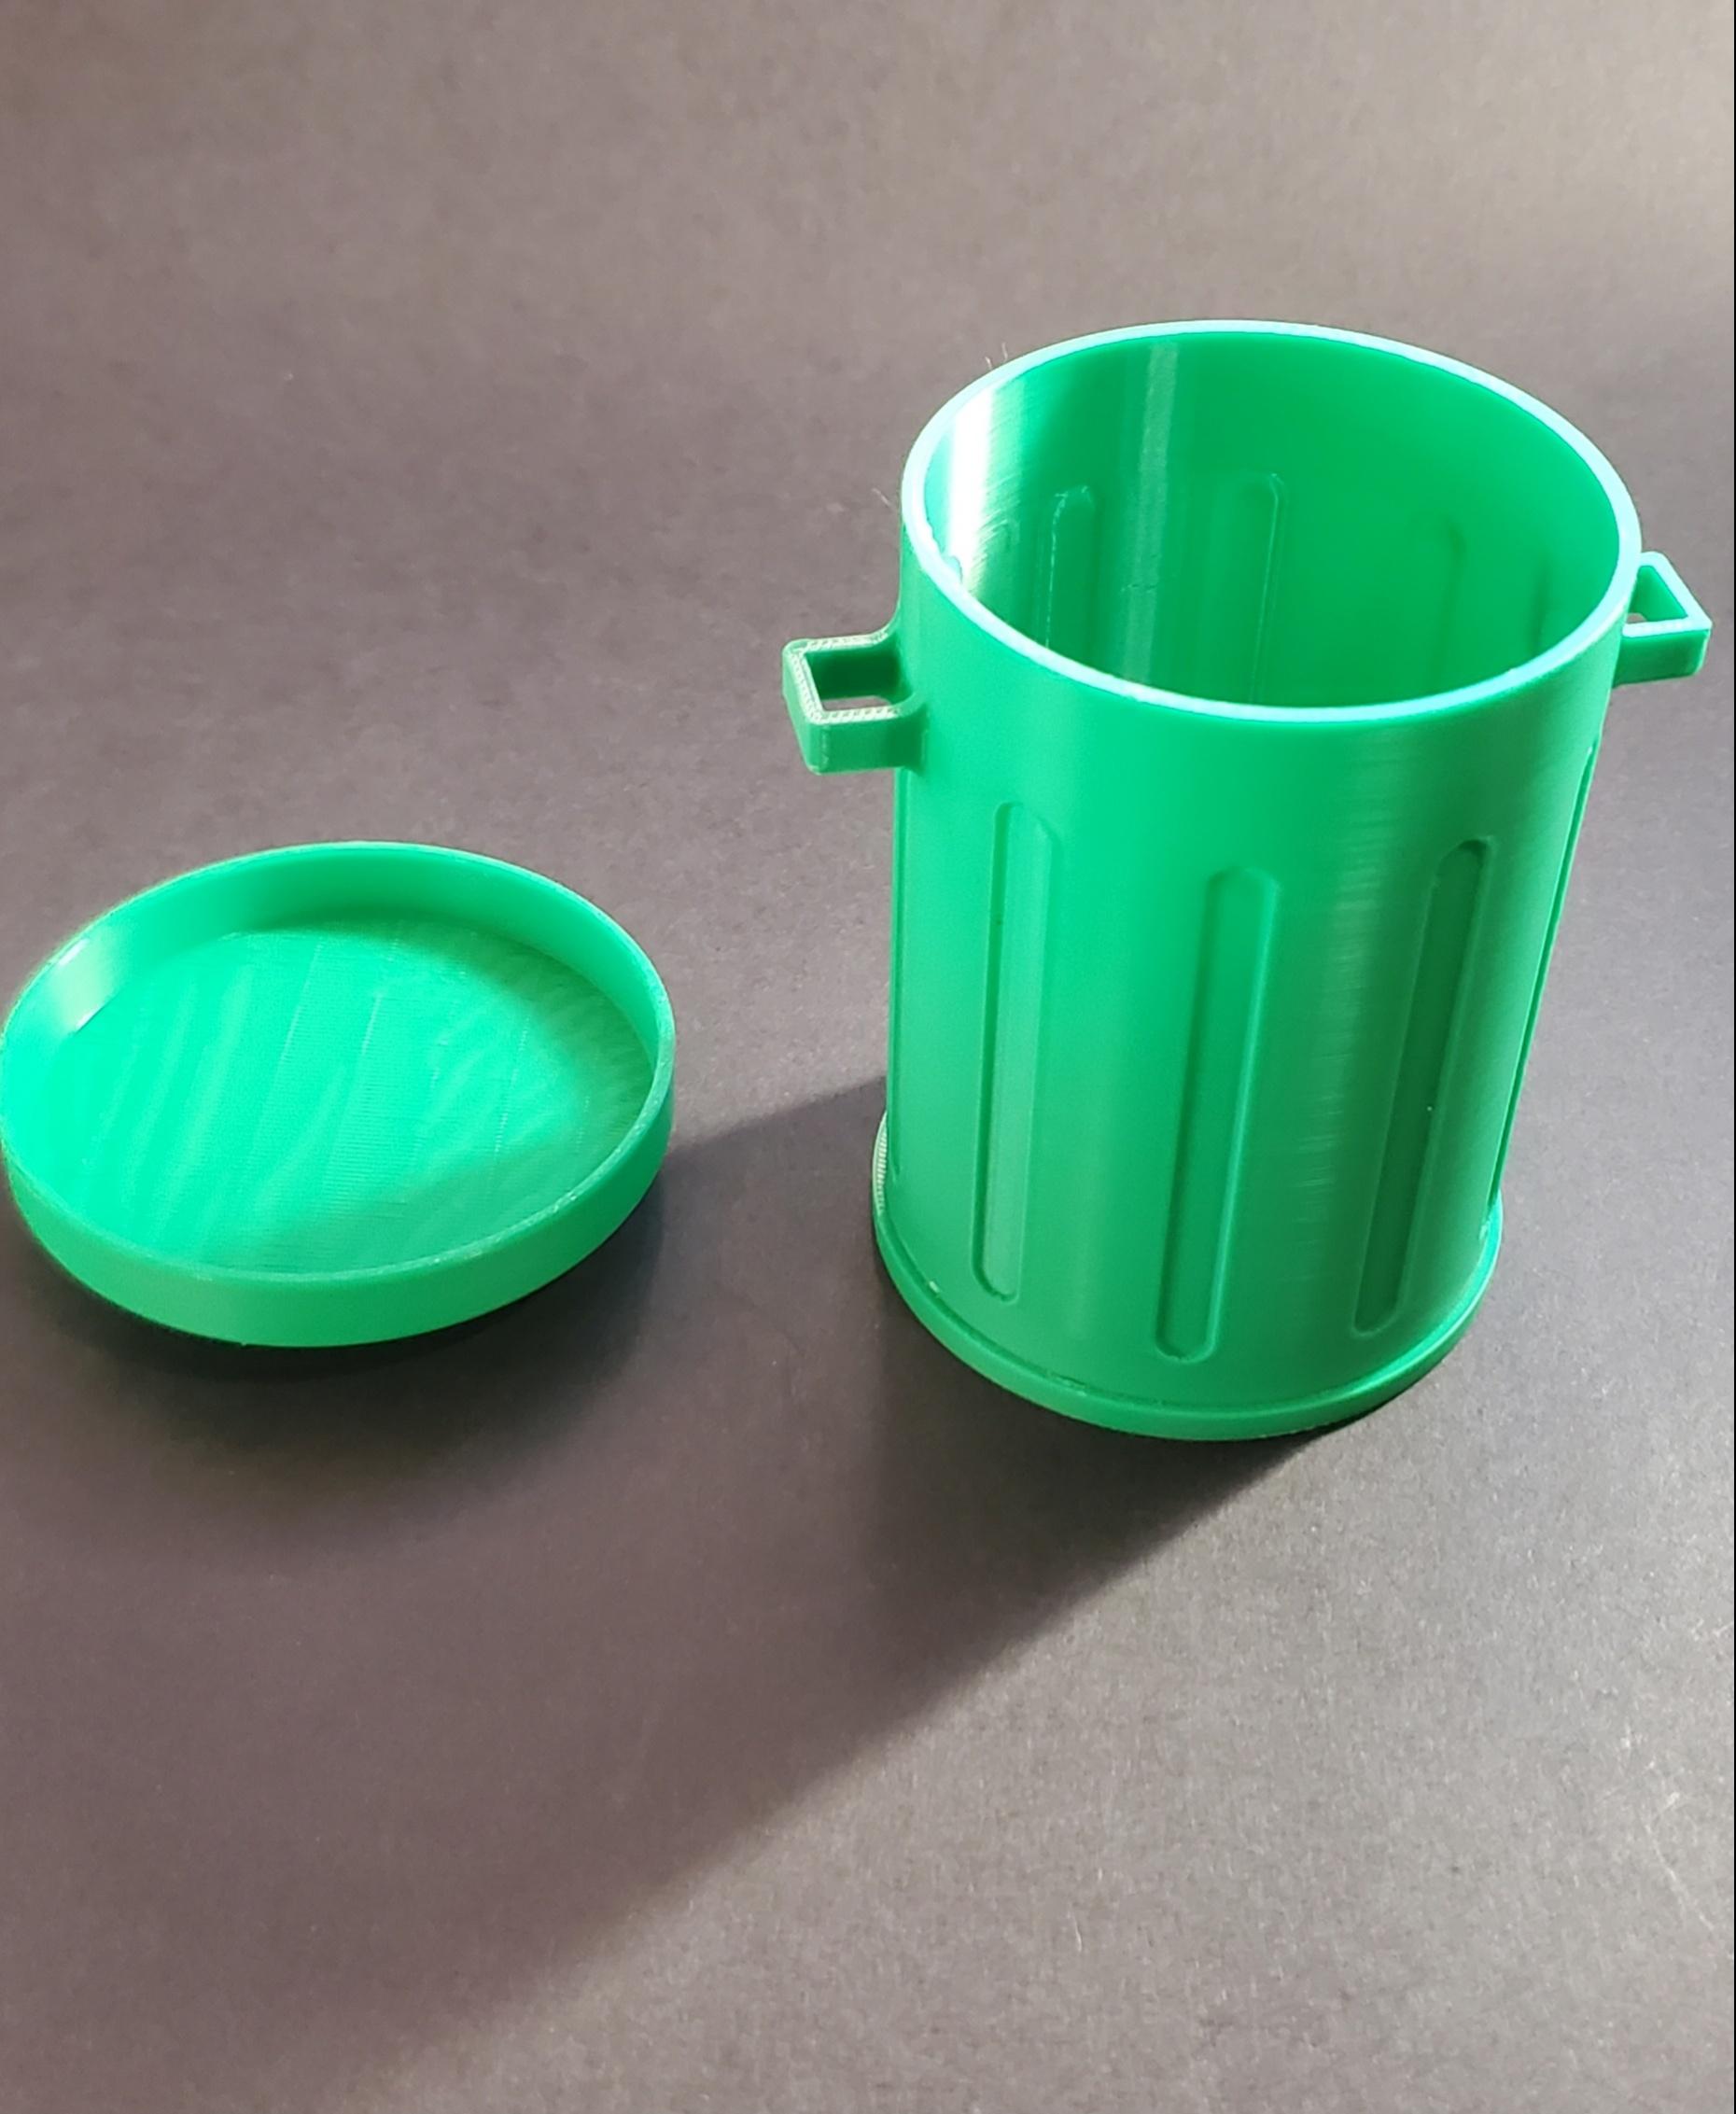 3D Printer Poop Trash Can 3d model